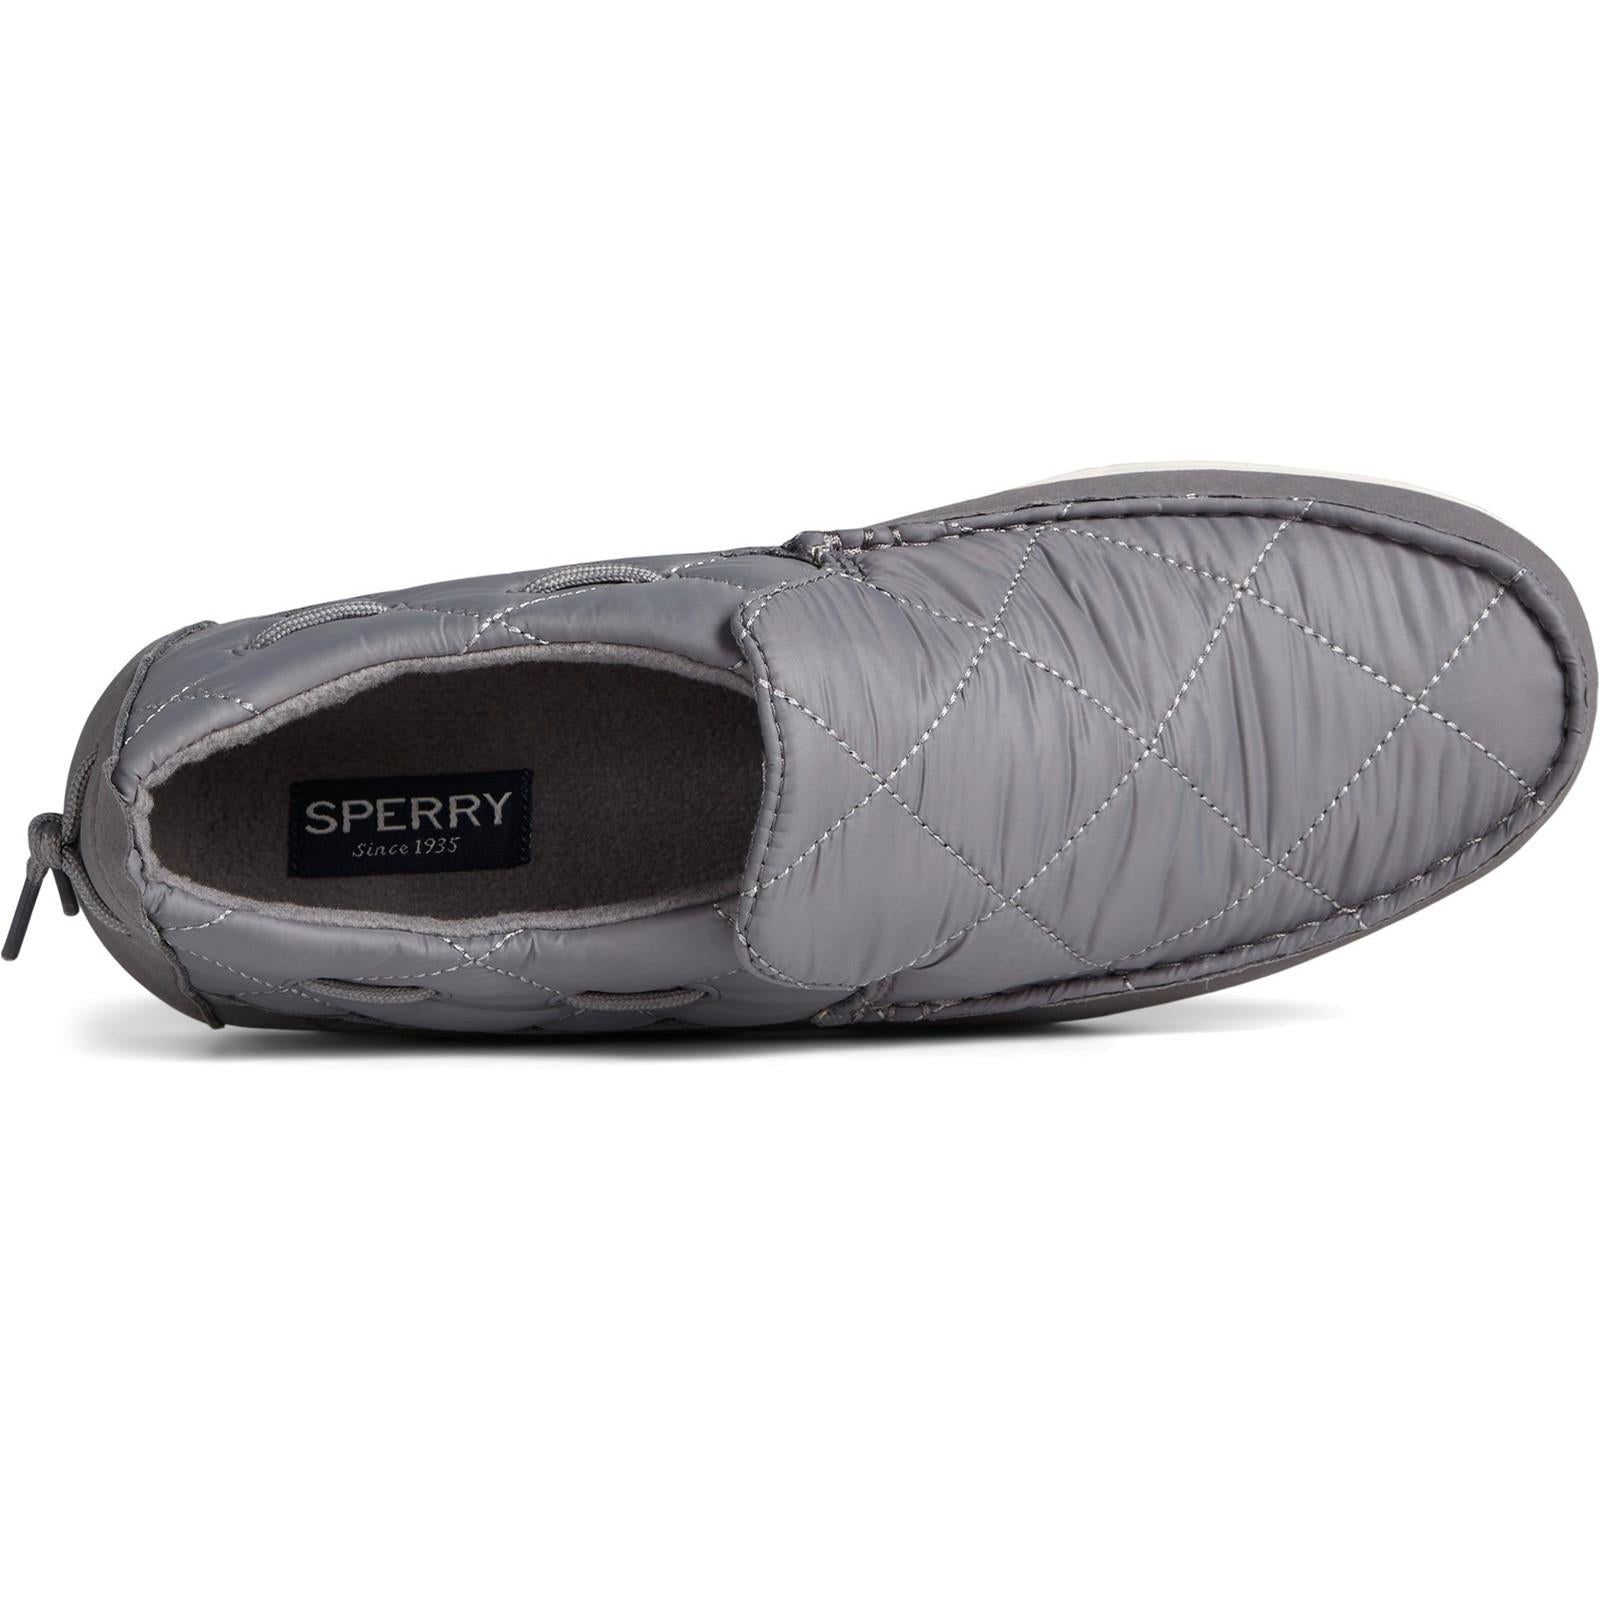 Sperry Top-sider Moc-Sider Nylon Slip On Shoes